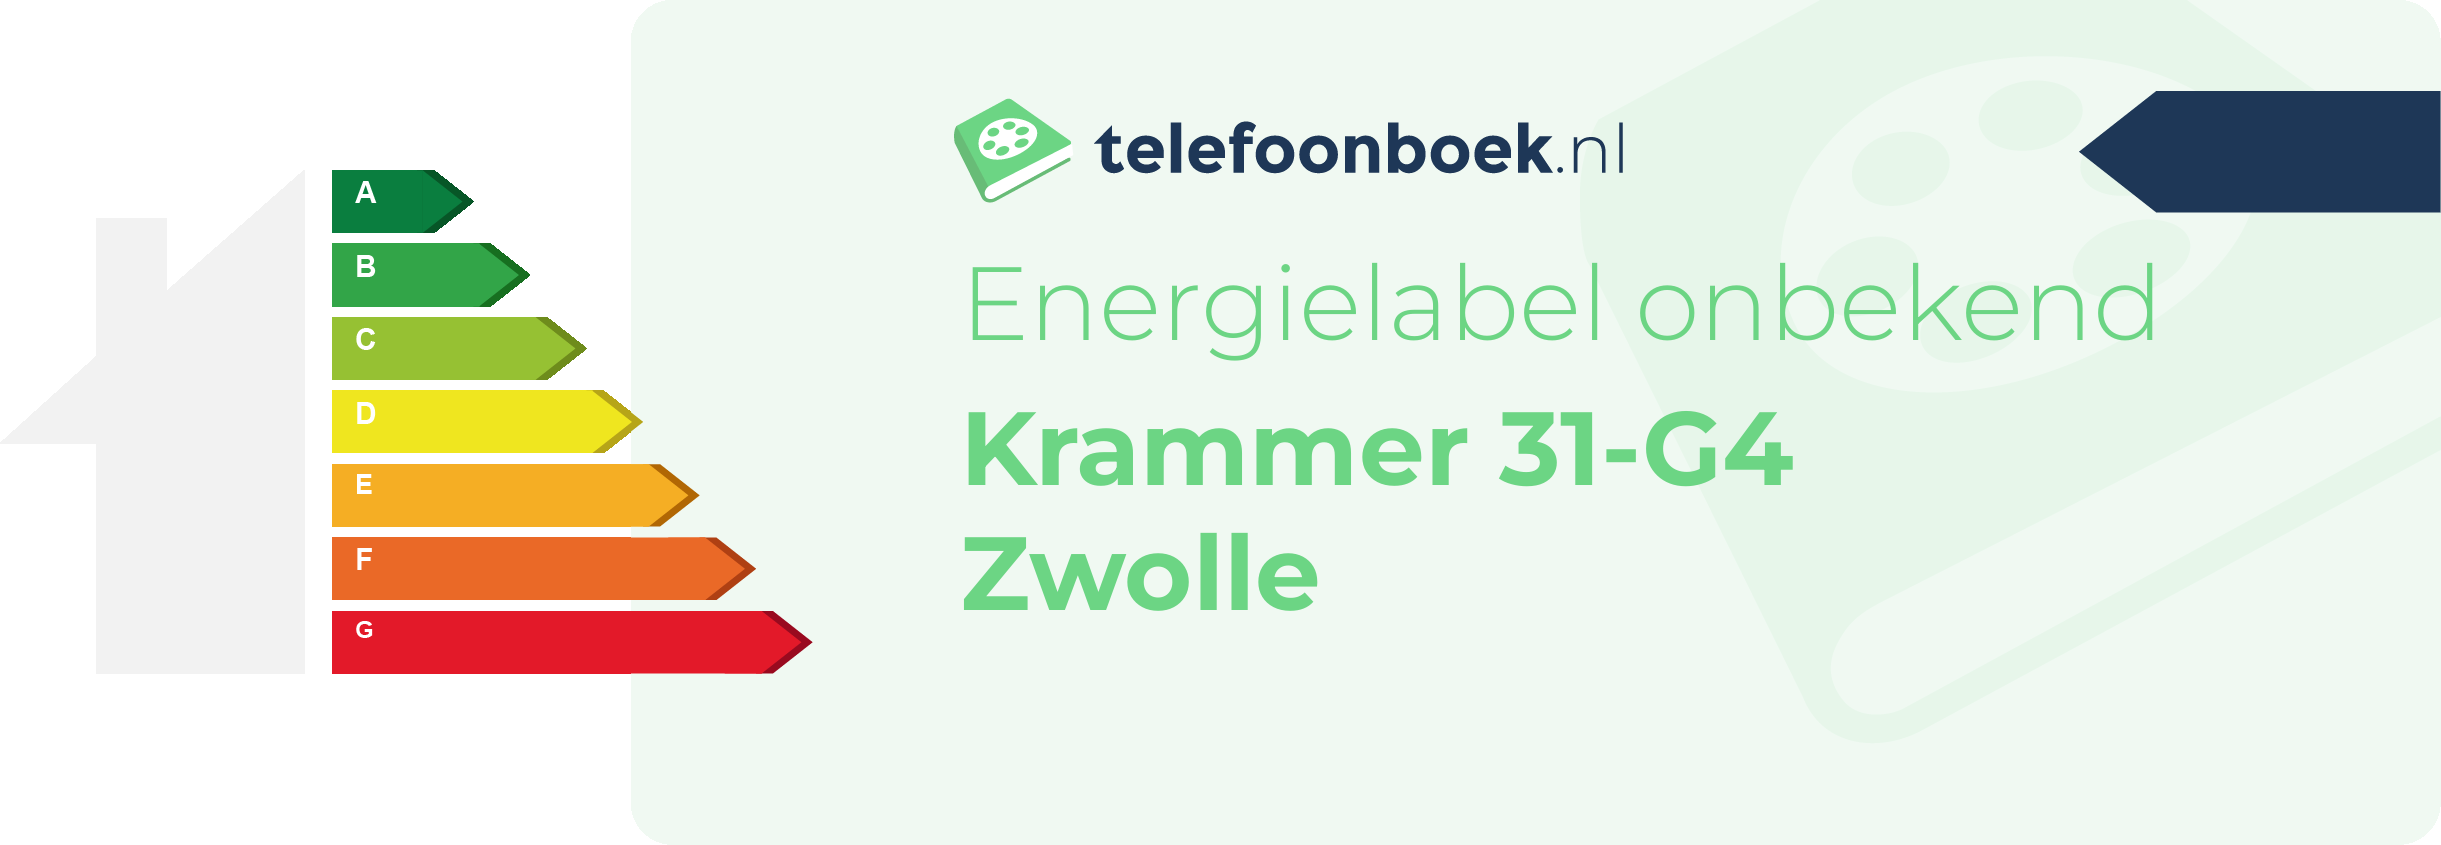 Energielabel Krammer 31-G4 Zwolle